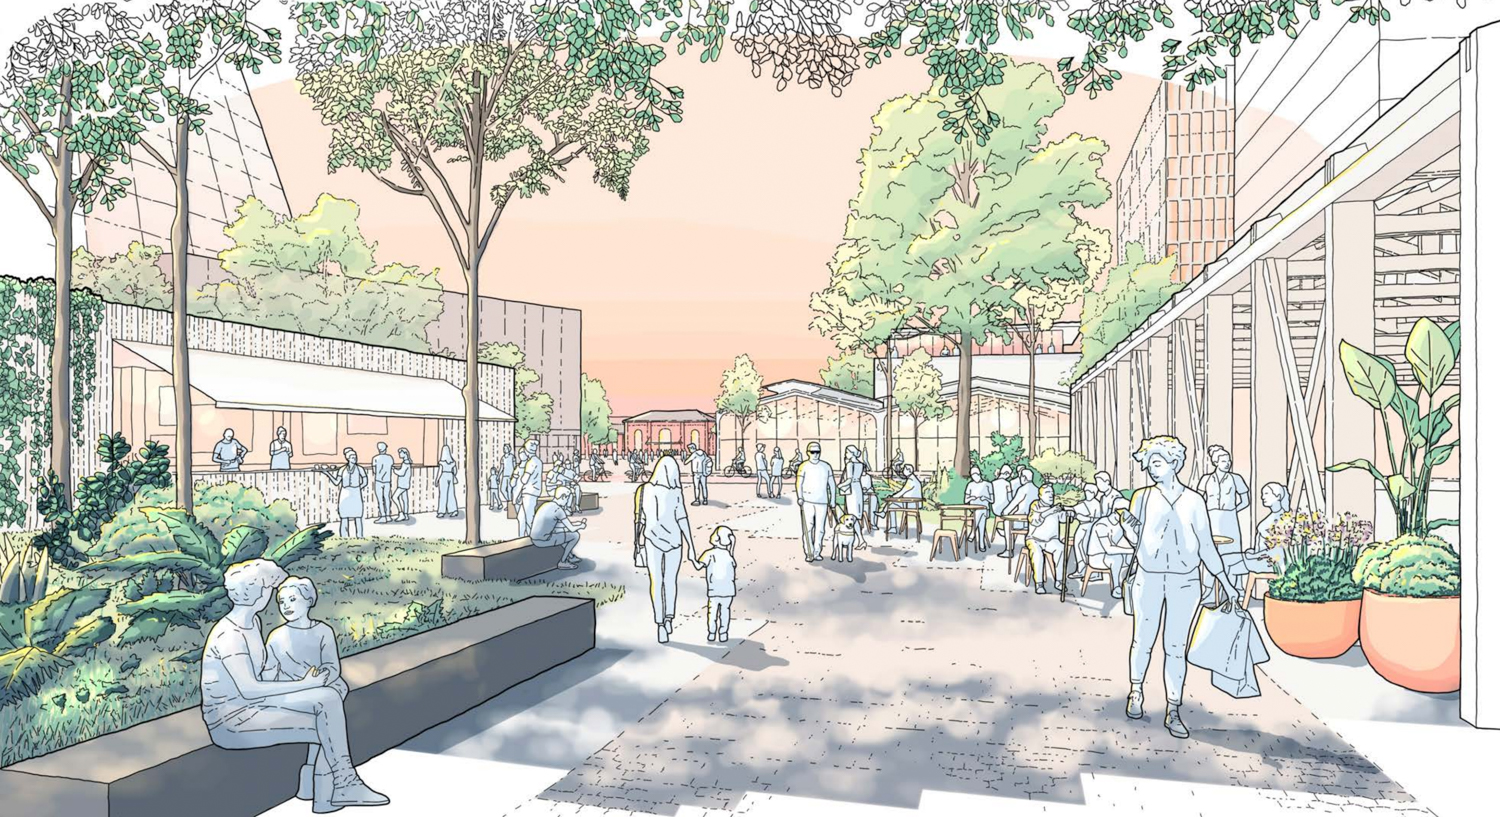 Downtown West concept retail and public space, illustration via San Jose Planning Department